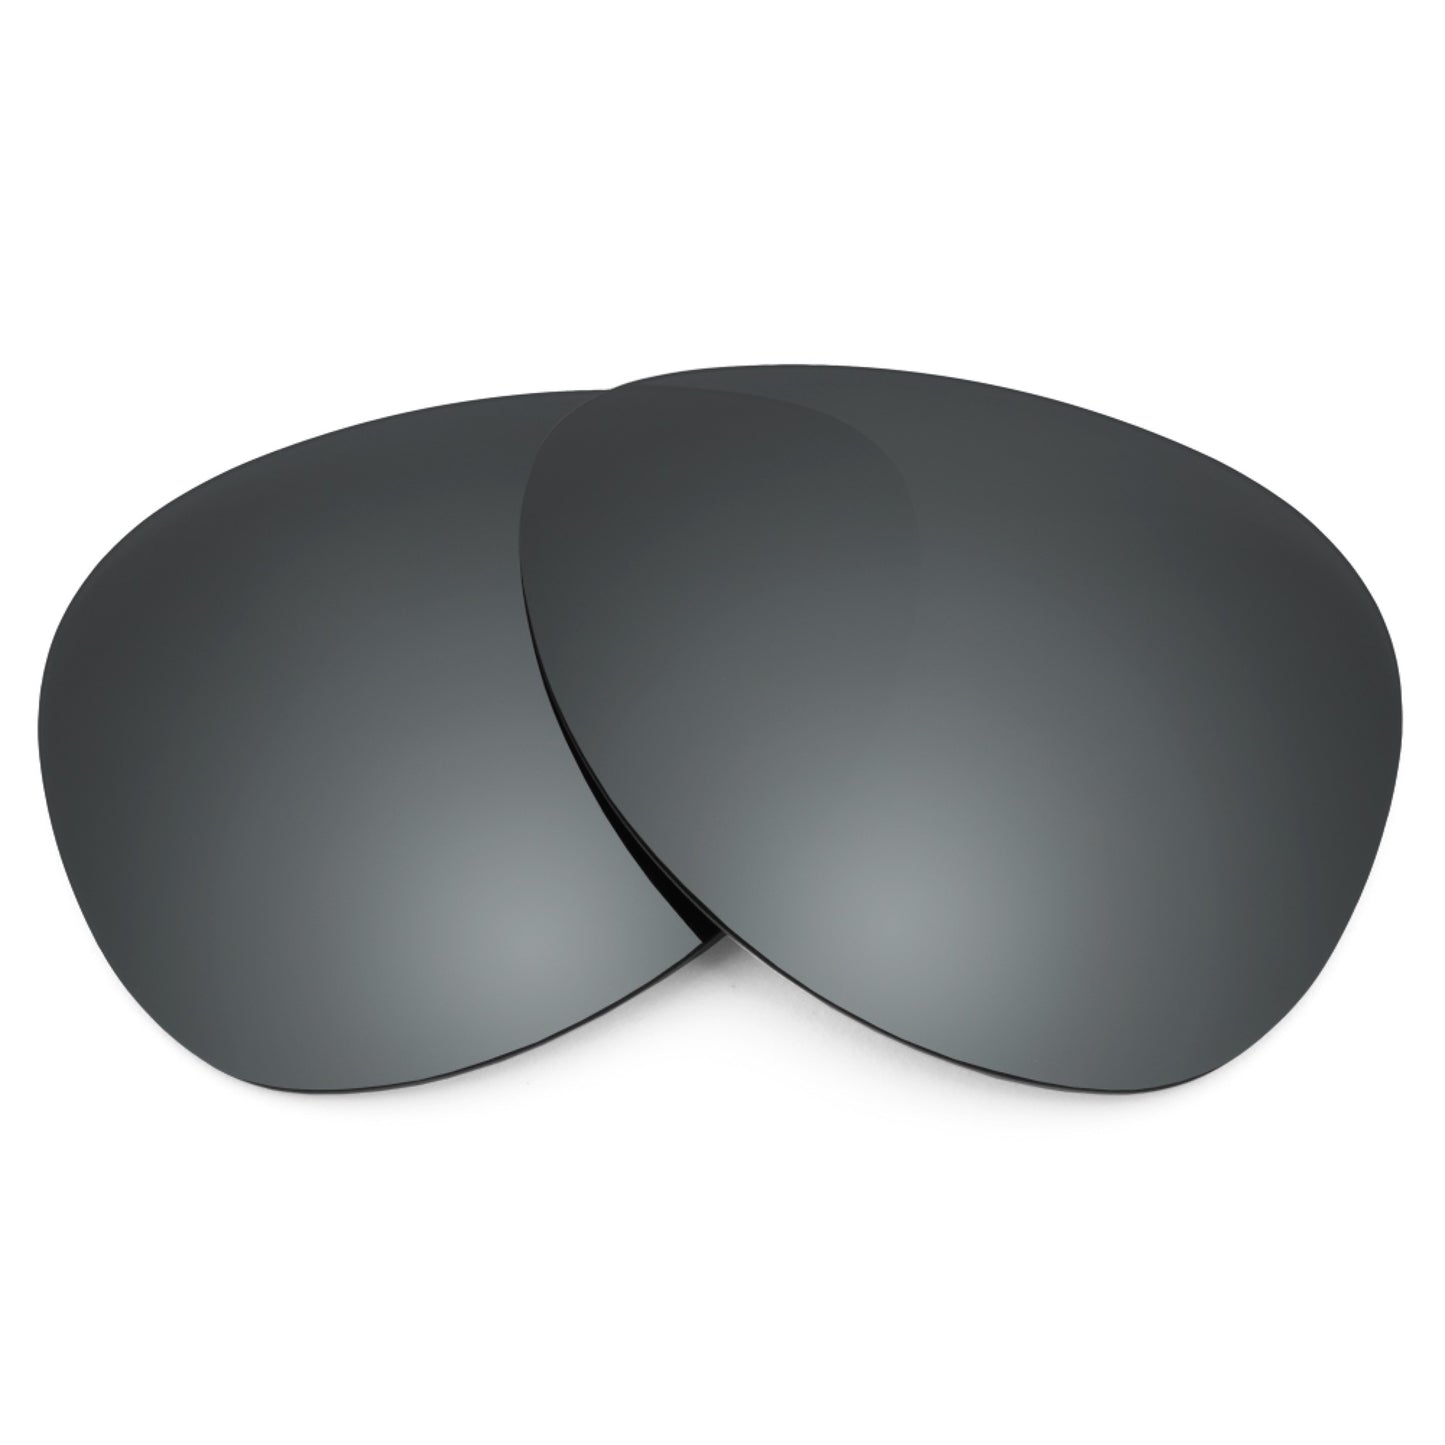 Revant replacement lenses for Ray-Ban Folding Aviator RB3479 55mm Non-Polarized Black Chrome